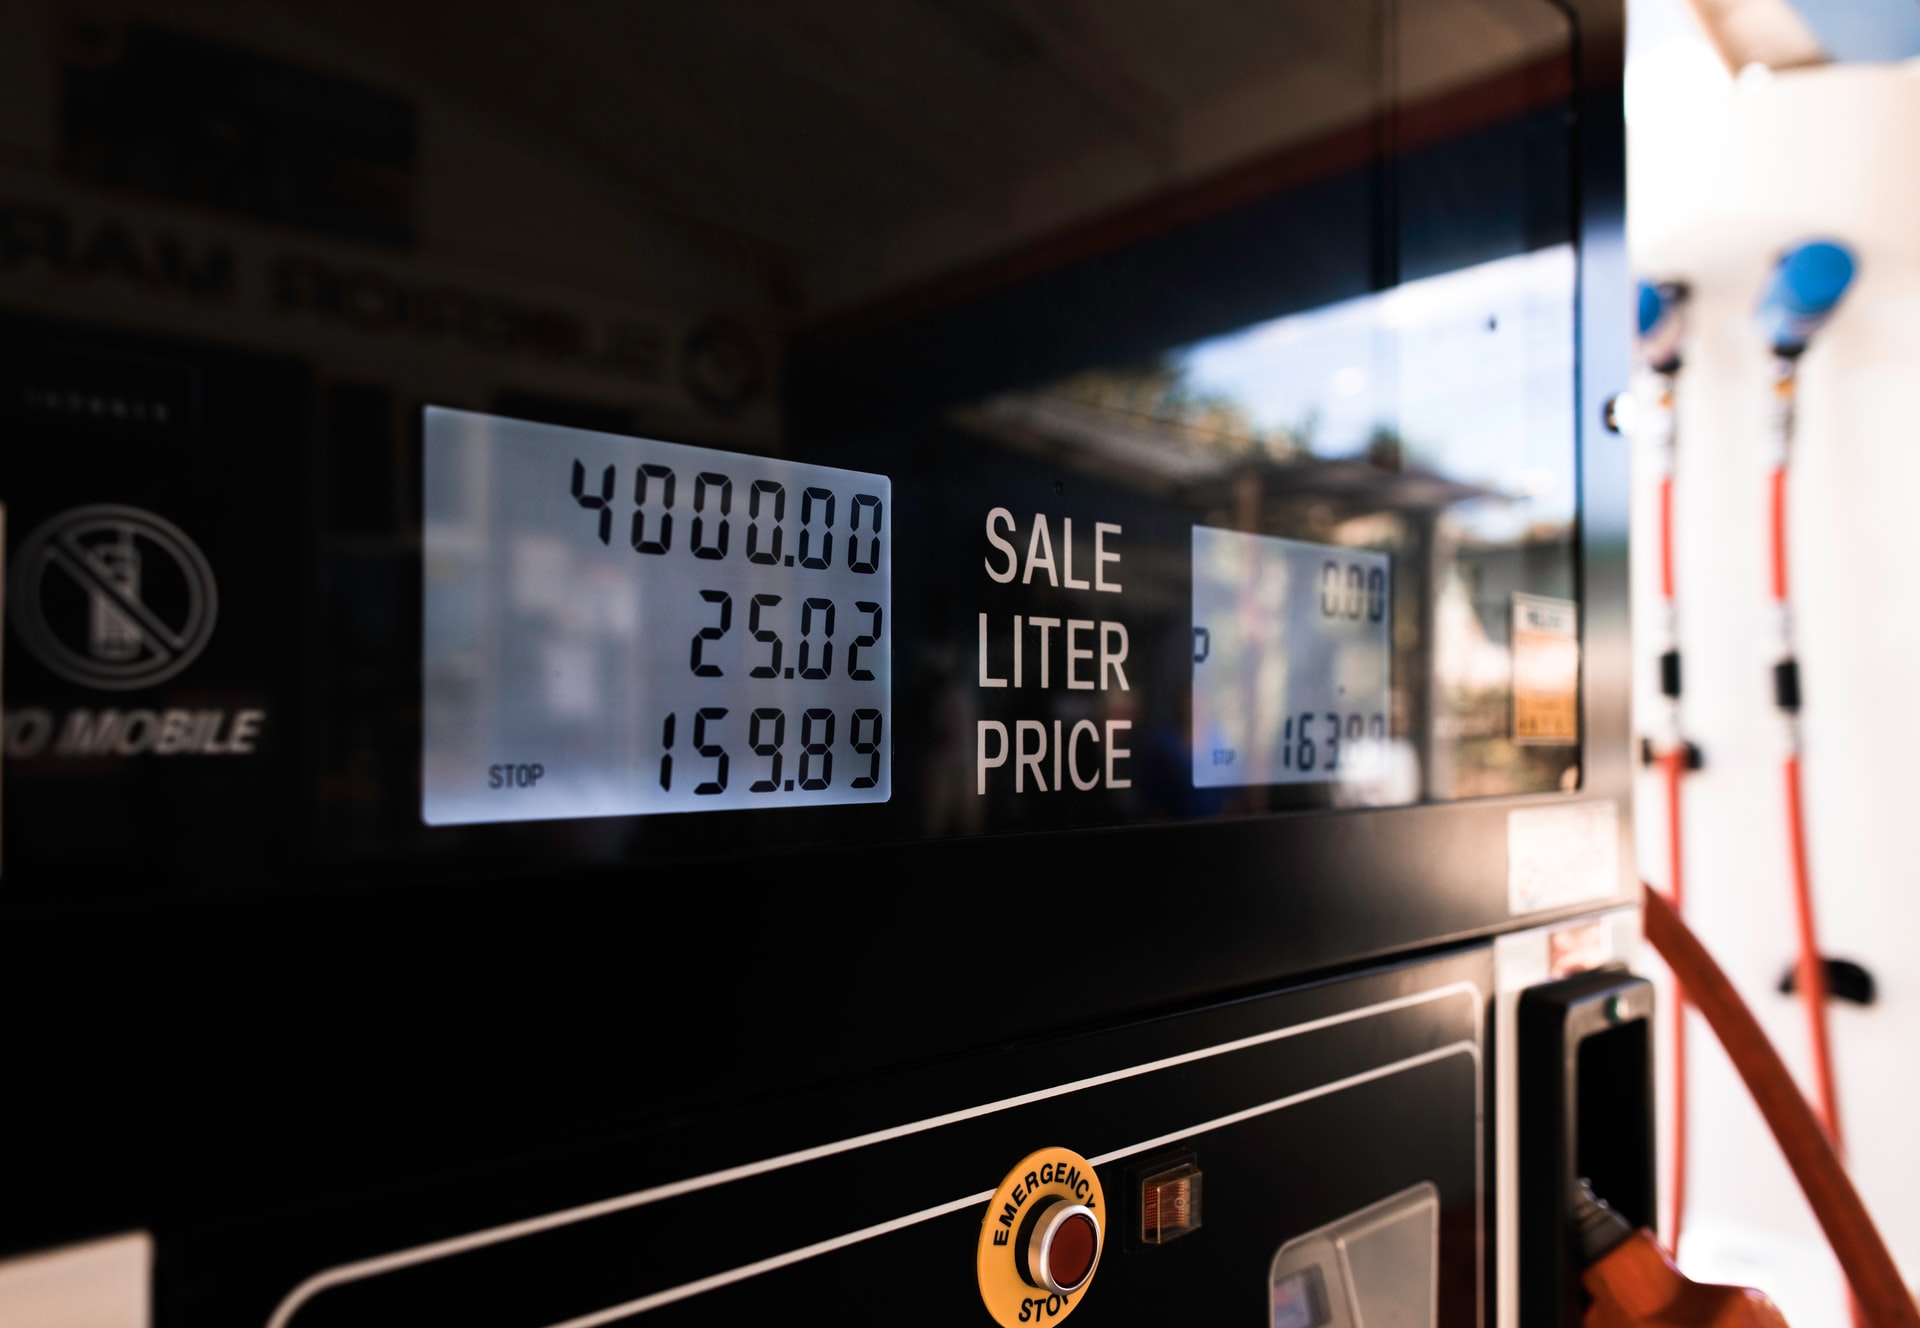 U.S. RISING GAS PRICES. JOE BIDEN GETS A BIG NO FROM THE BIG “O”